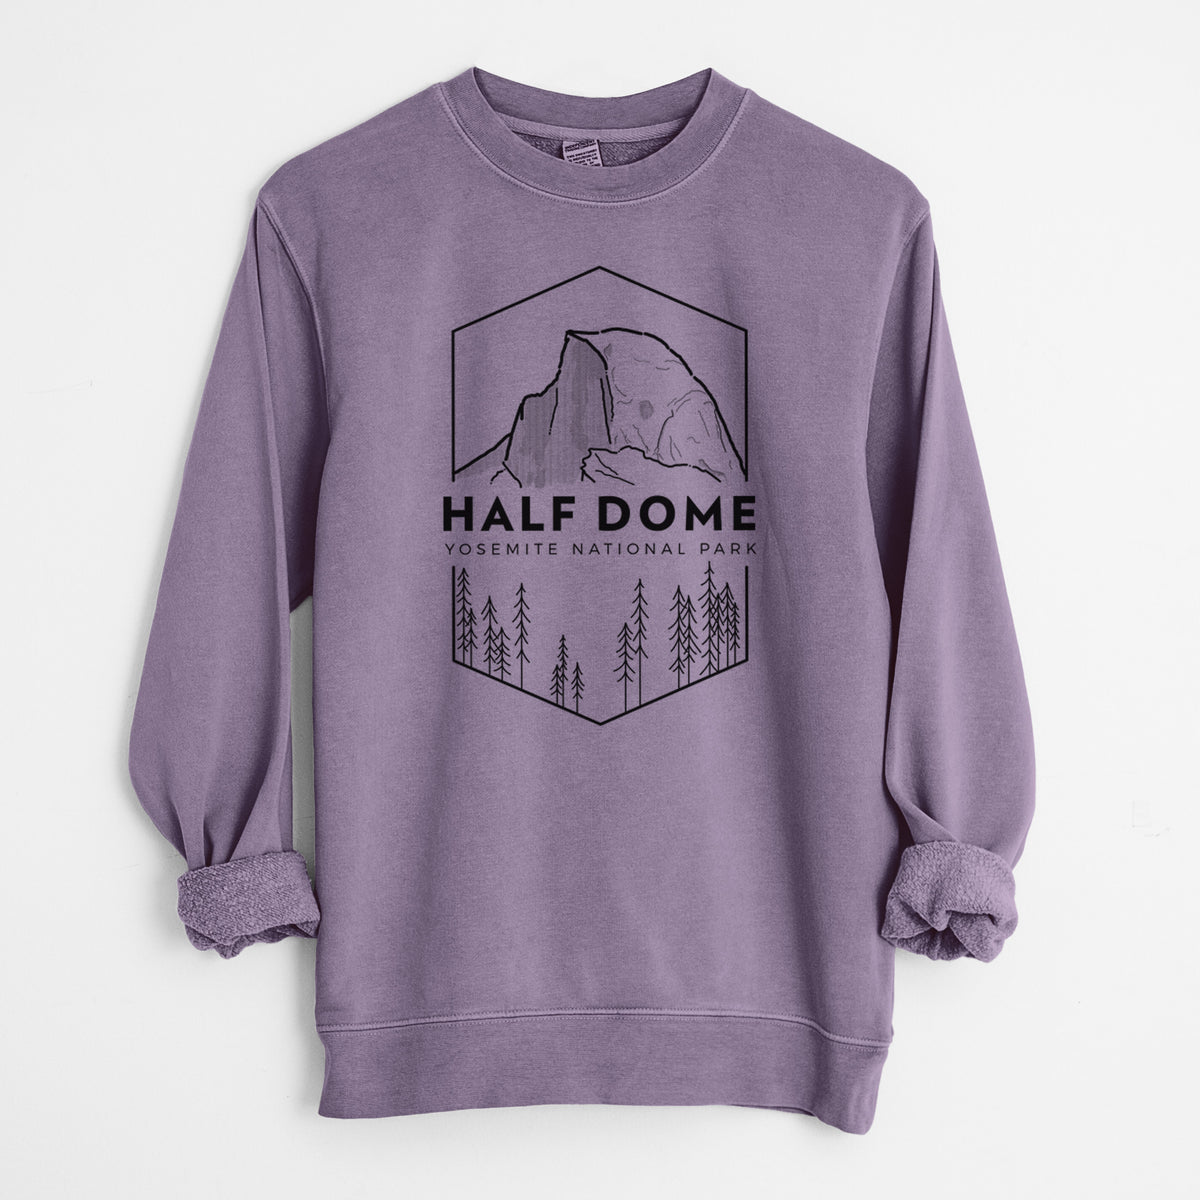 Half Dome - Yosemite National Park - Unisex Pigment Dyed Crew Sweatshirt